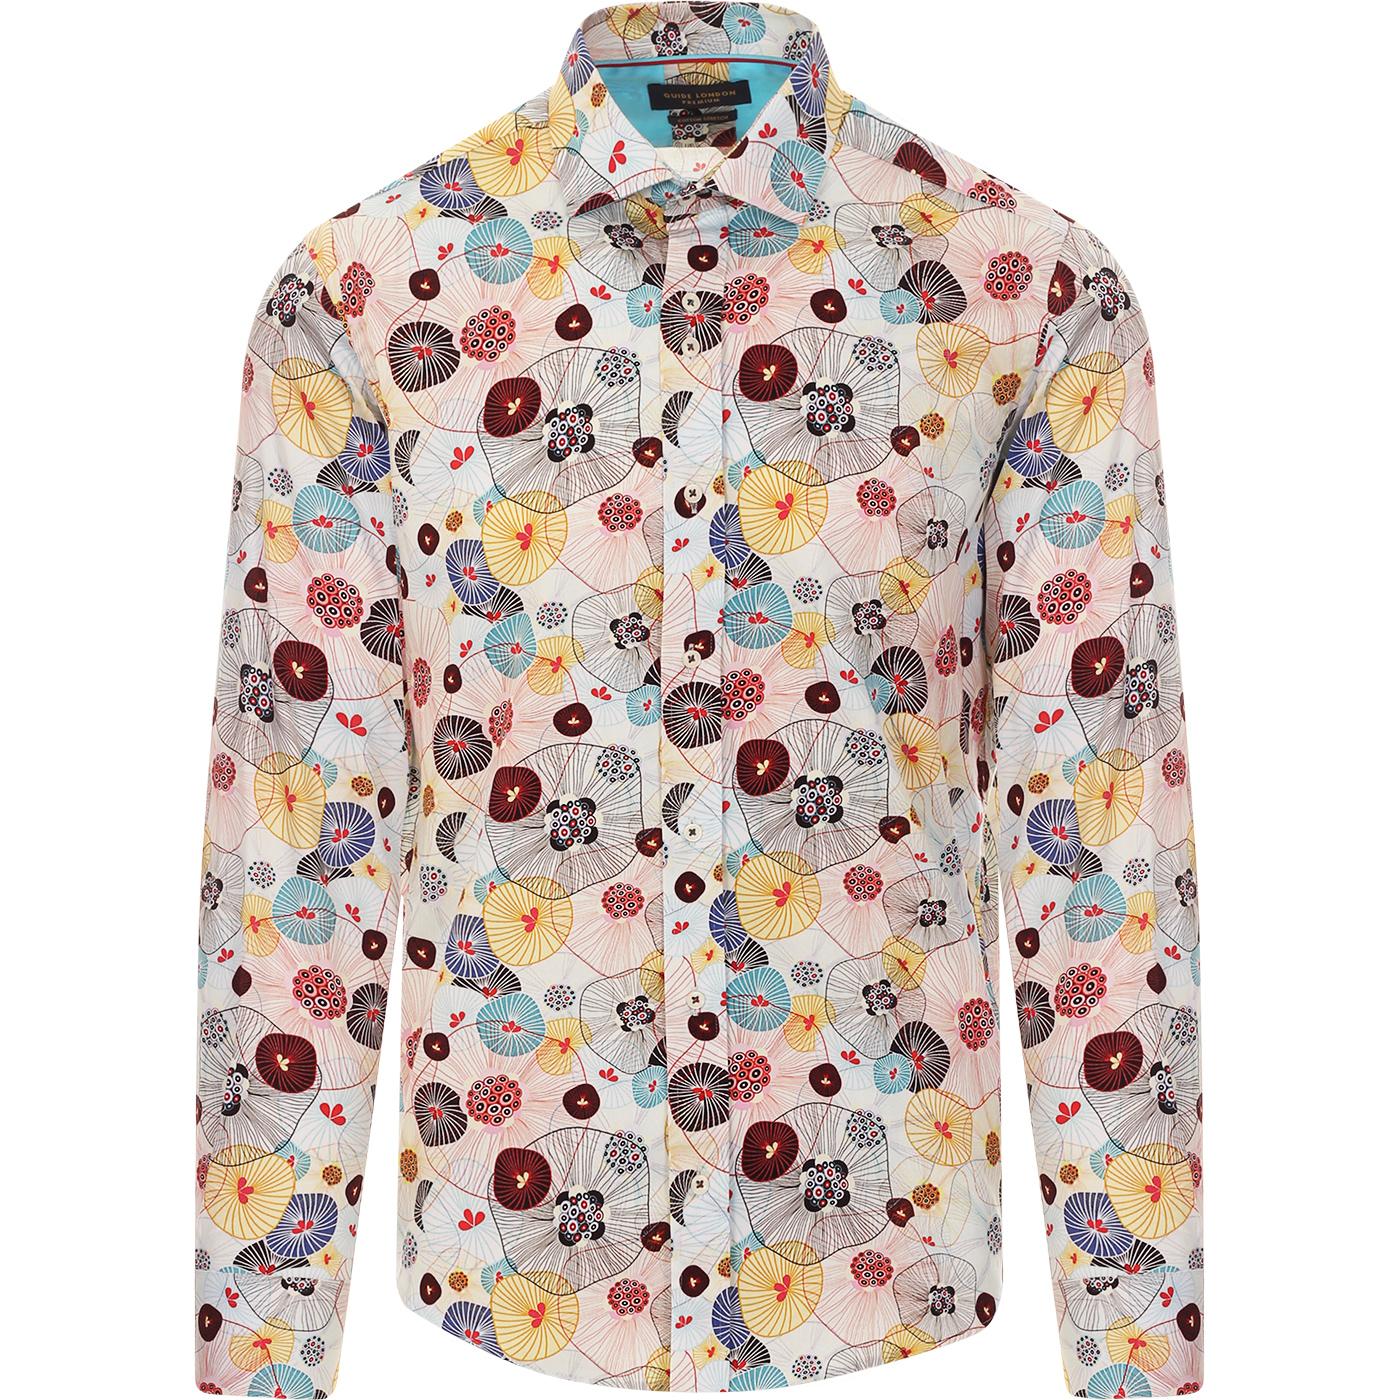 GUIDE LONDON Retro Atomic Era Floral Pattern Shirt